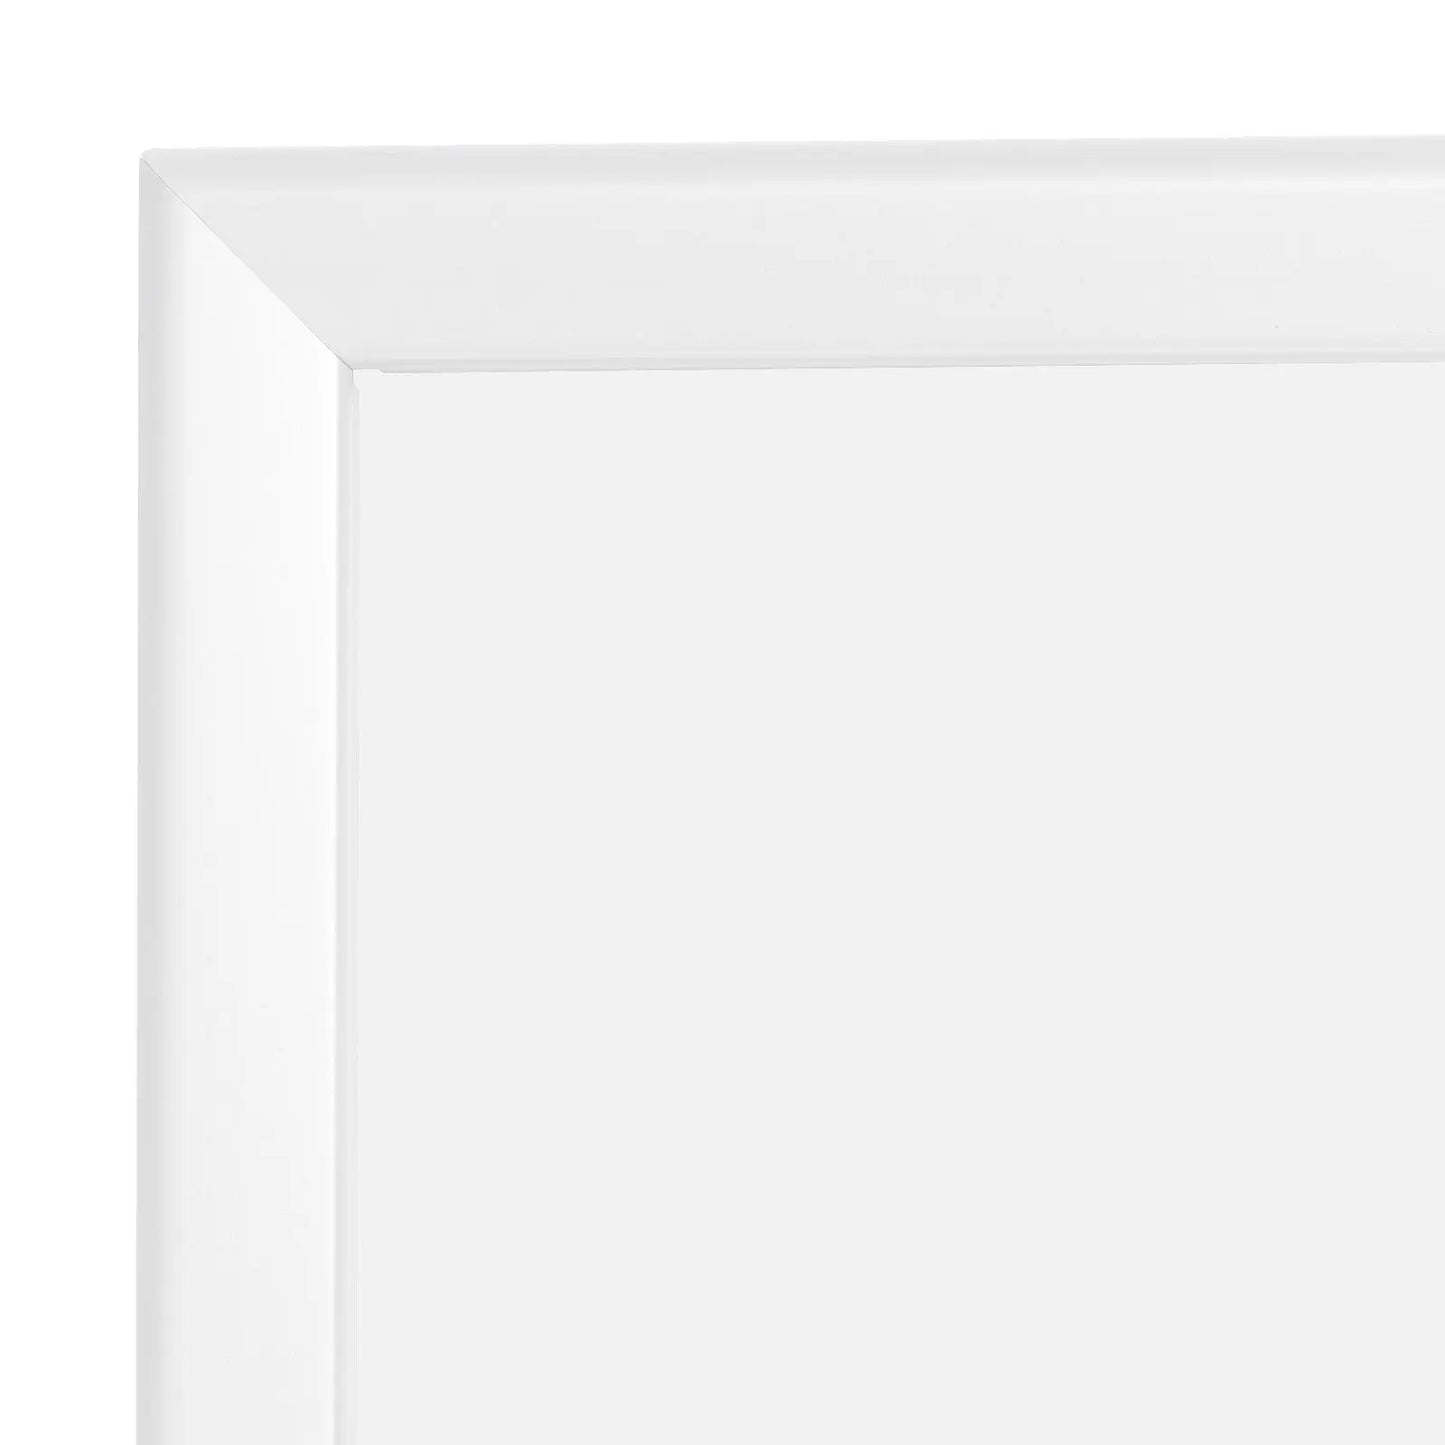 30x40 White SnapeZo® Snap Frame - 1.25" Profile - Snap Frames Direct